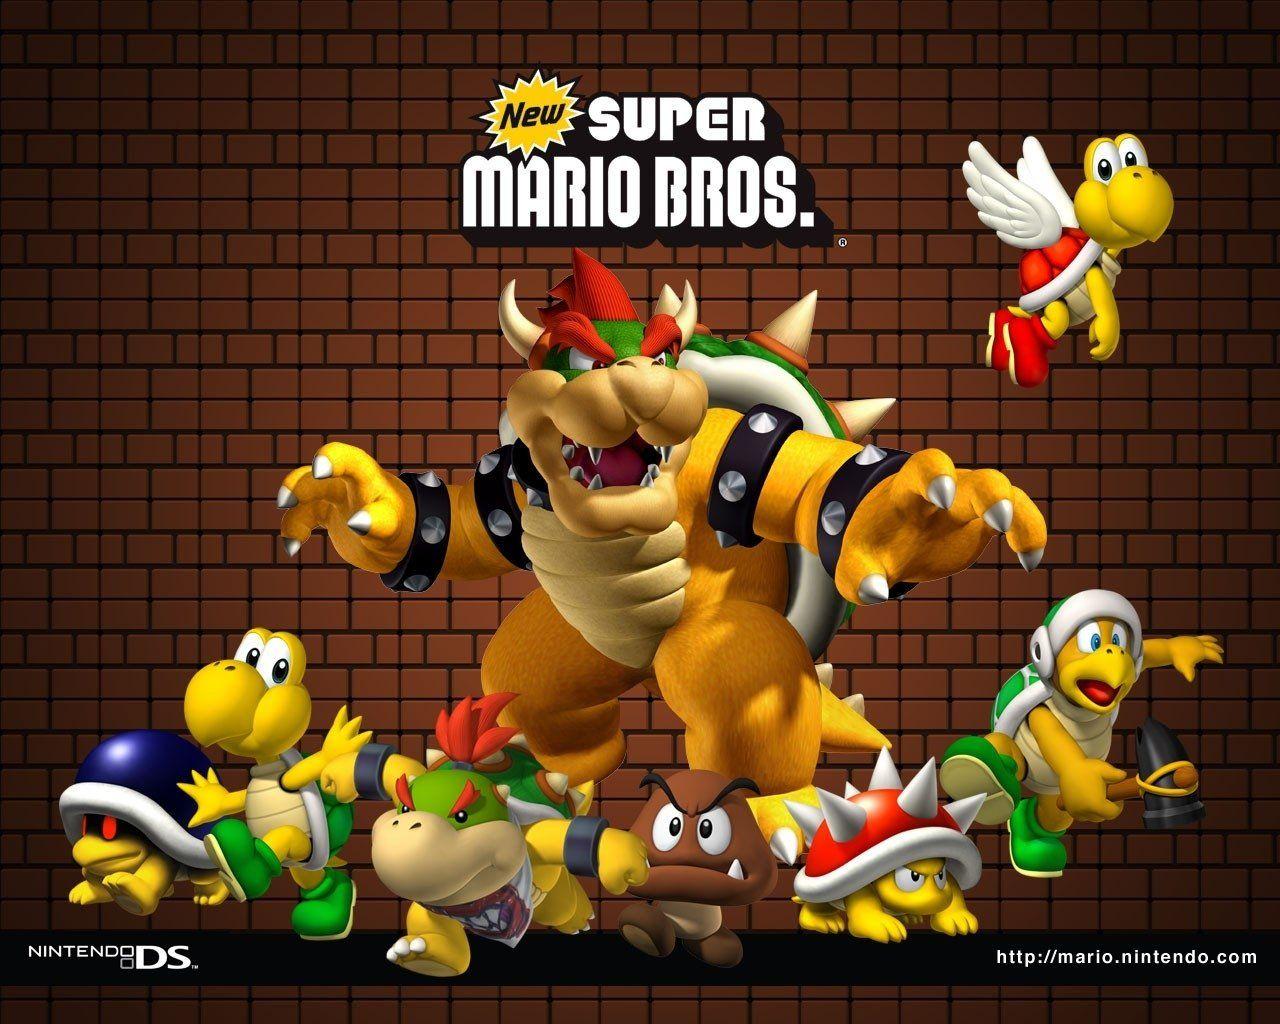 Super Mario 64 Wallpapers